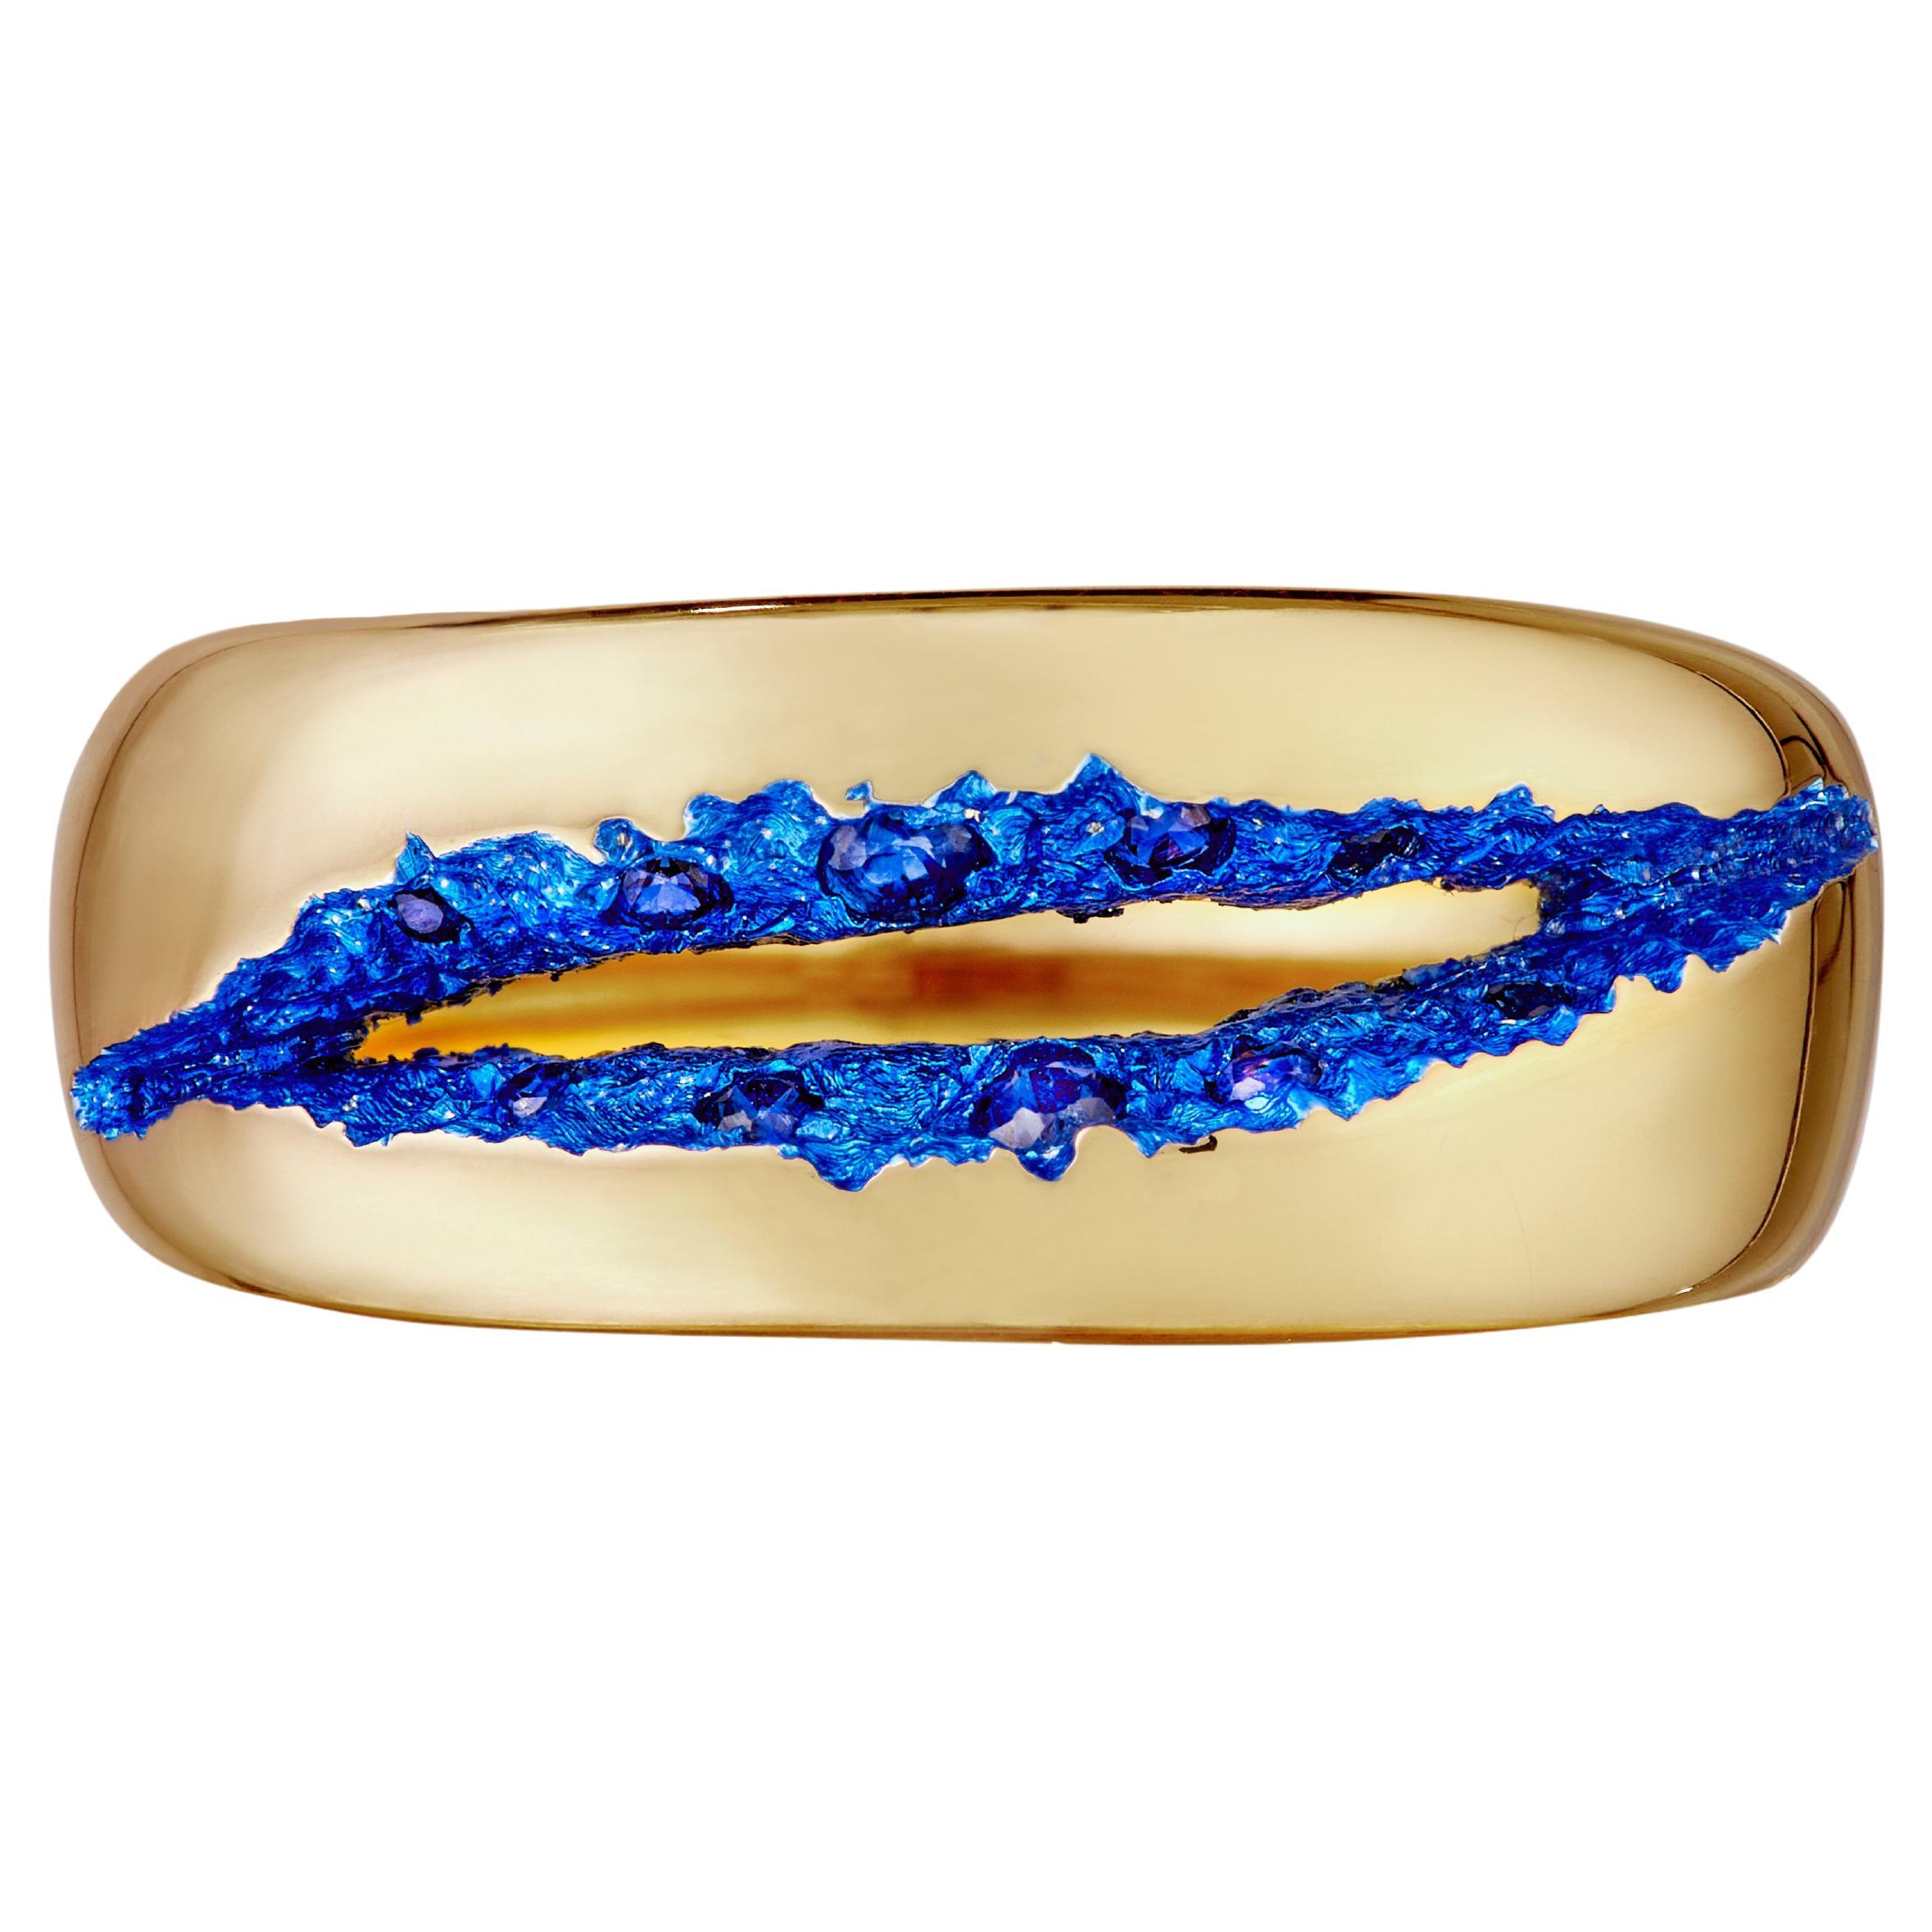 Rock Pool 18 Karat Yellow Gold Wide Electric Blue Sapphire Ring